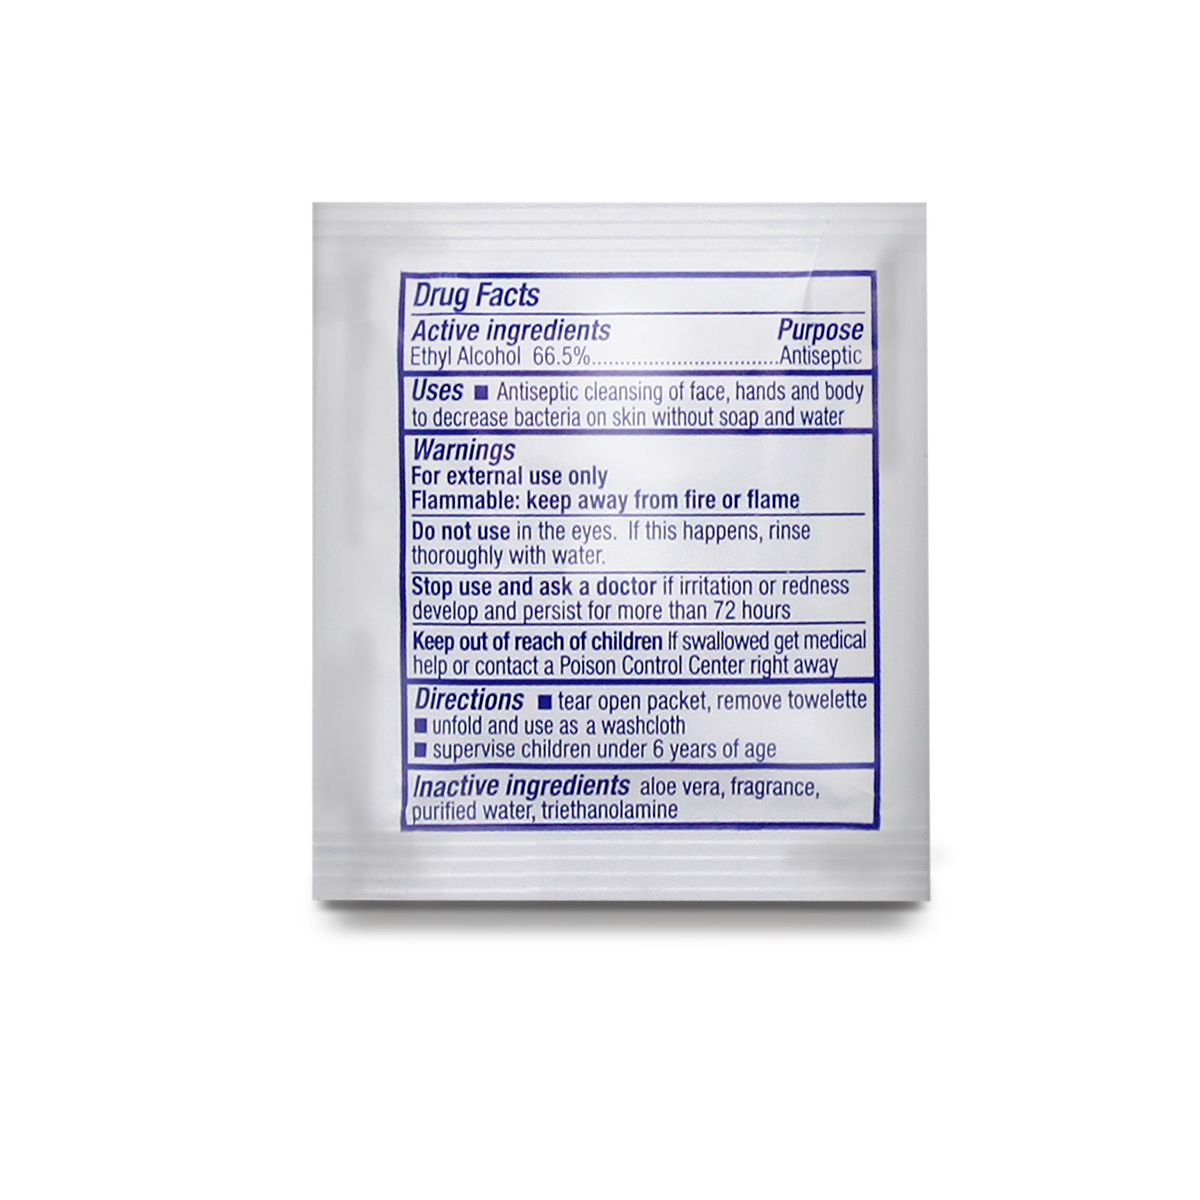 38401 Safetec® Antiseptic Wipes 